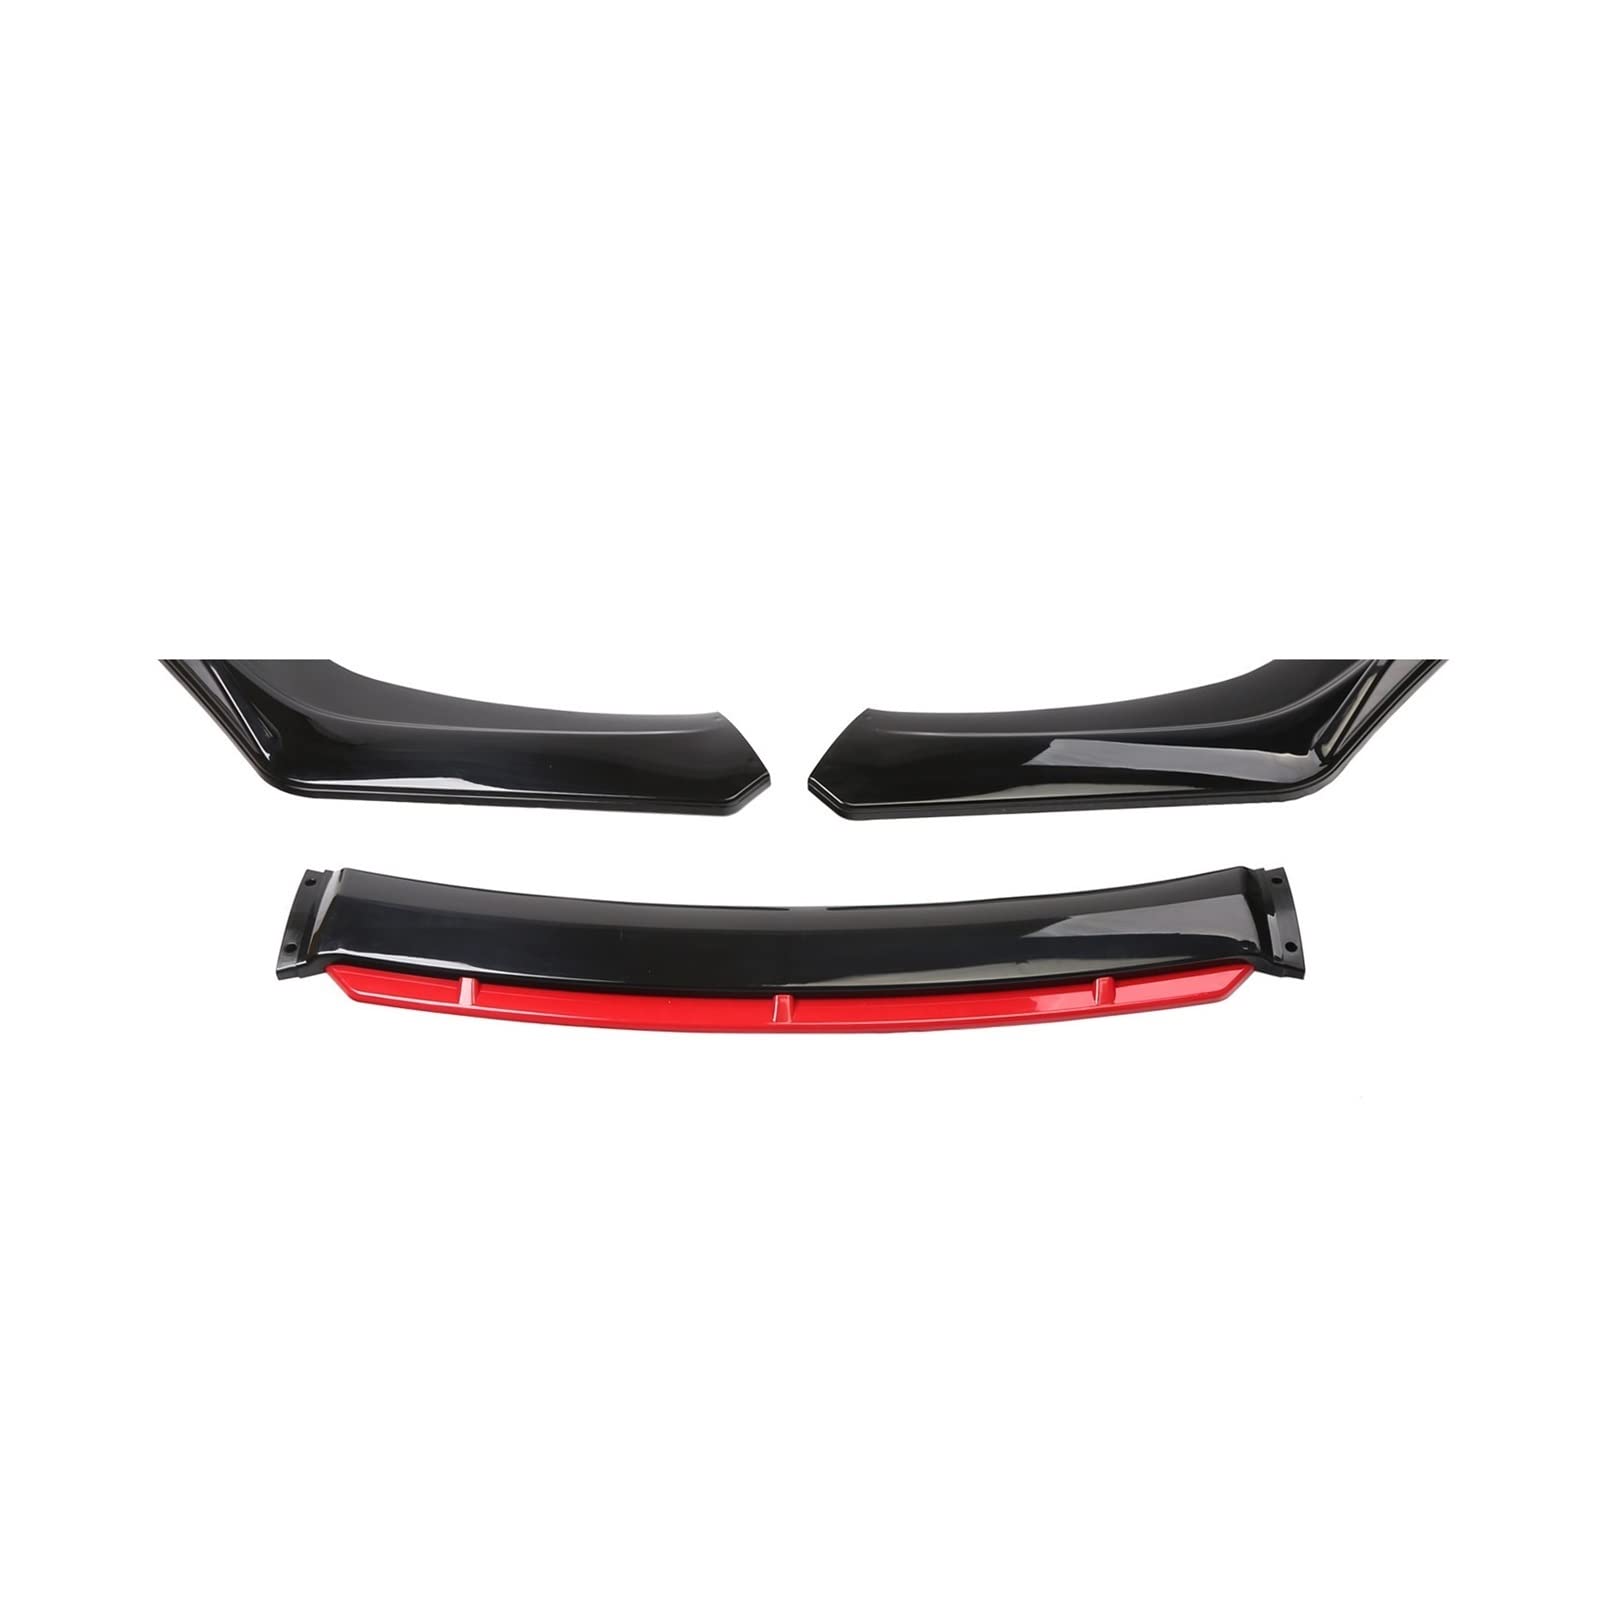 Frontspoilerlippe Kompatibel for Mazda 3 Axela 6 Atenza CX5 CX-4 Spoiler Splitter Diffusor Body Kit Guards Universal Fit Autozubehör(Black Red) von NGFDSSBB